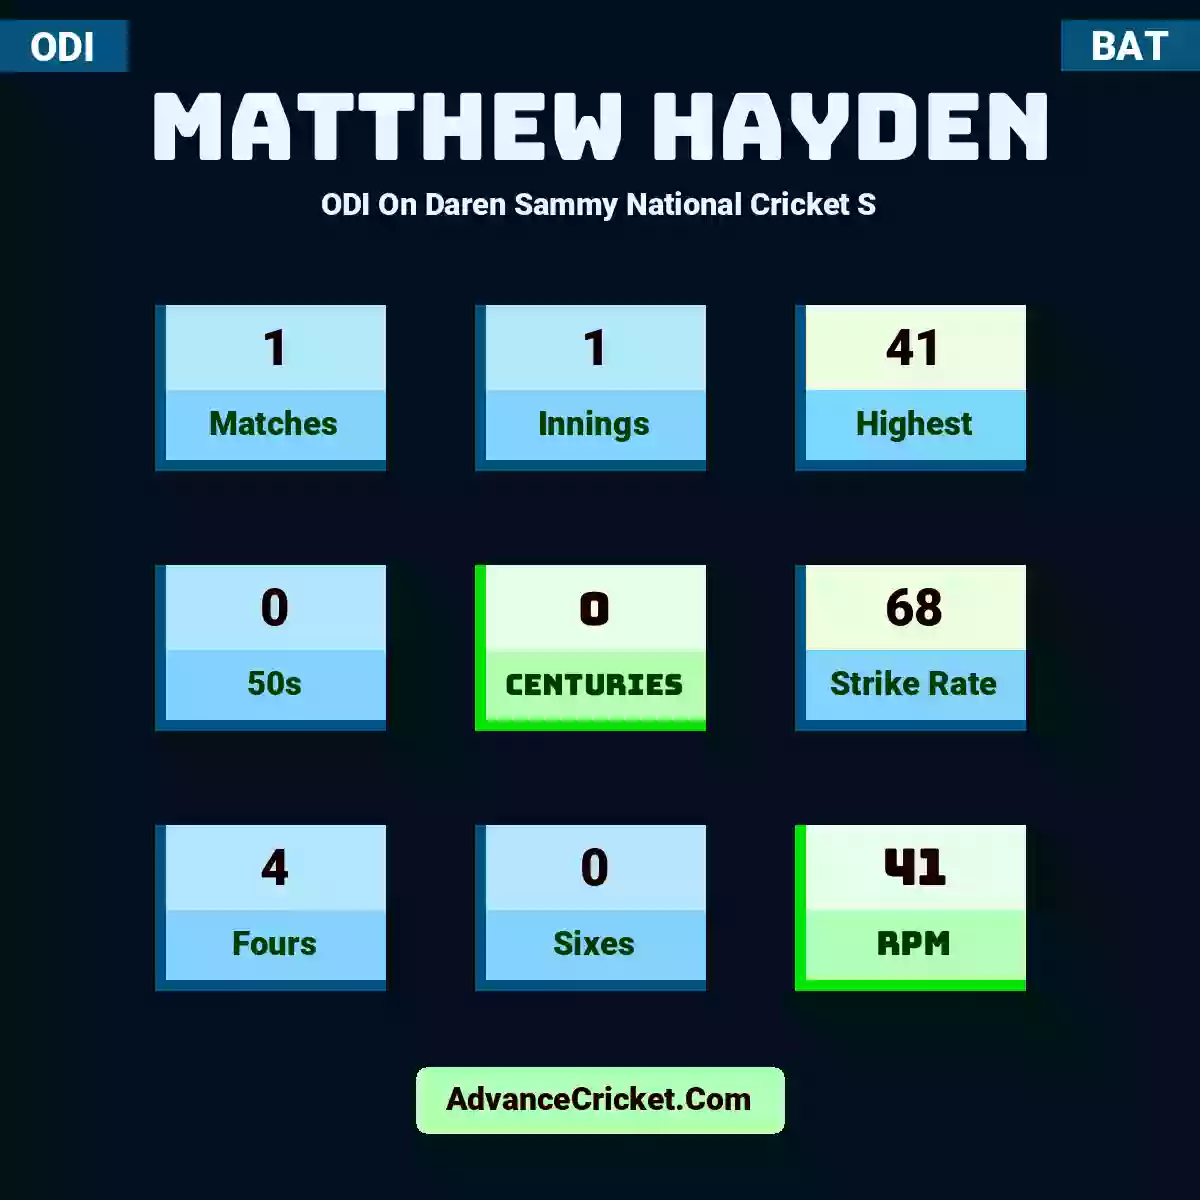 Matthew Hayden ODI  On Daren Sammy National Cricket S, Matthew Hayden played 1 matches, scored 41 runs as highest, 0 half-centuries, and 0 centuries, with a strike rate of 68. M.Hayden hit 4 fours and 0 sixes, with an RPM of 41.